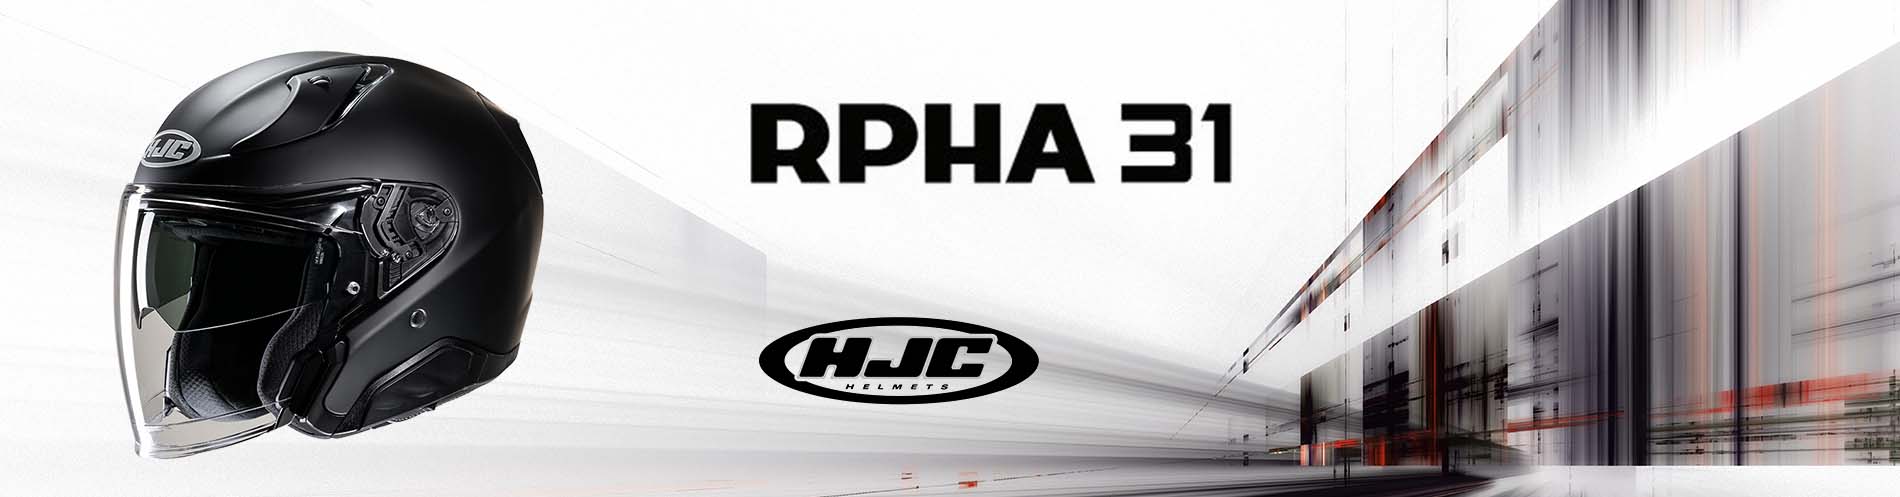 HJC RPHA31